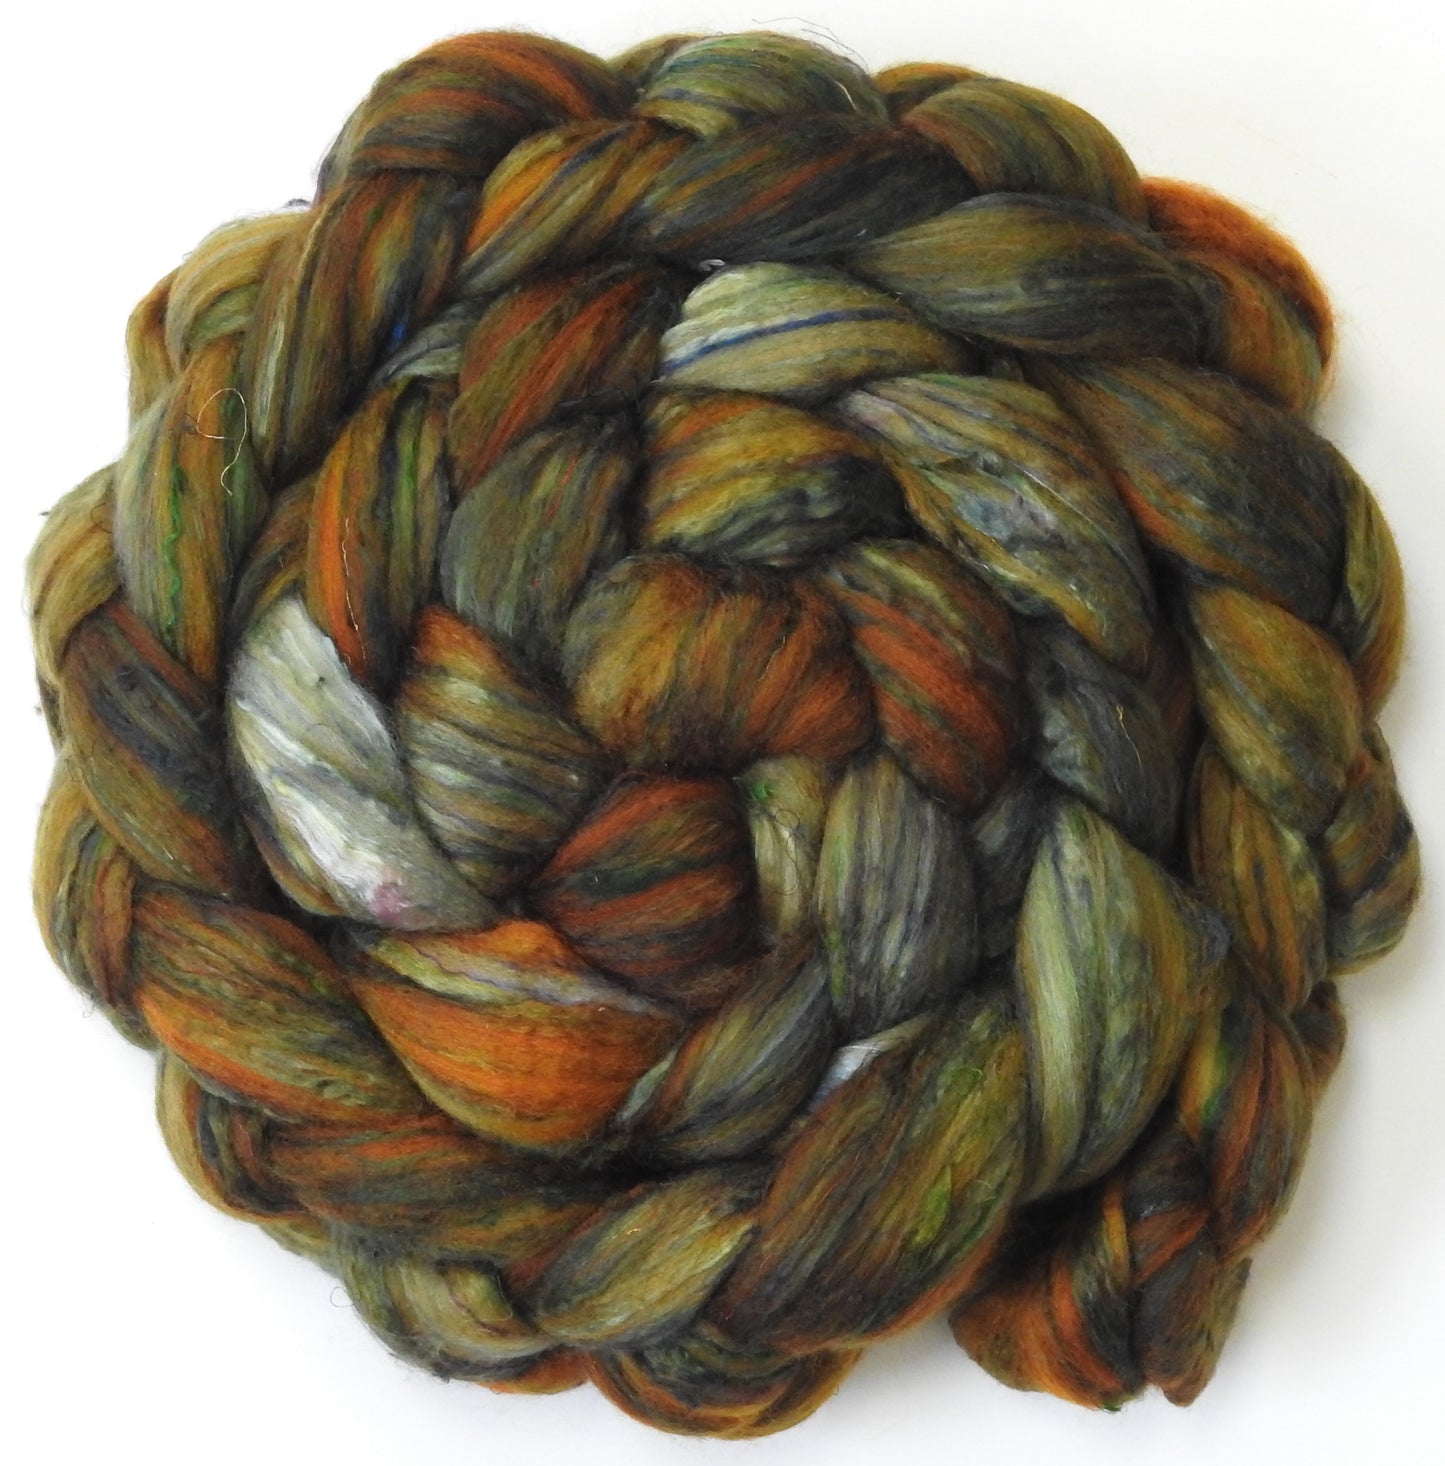 Bracken (5.6 oz) - Batt in a Braid #39ish - Falkland Merino/ Mulberry Silk / Sari Silk (60/25/15)